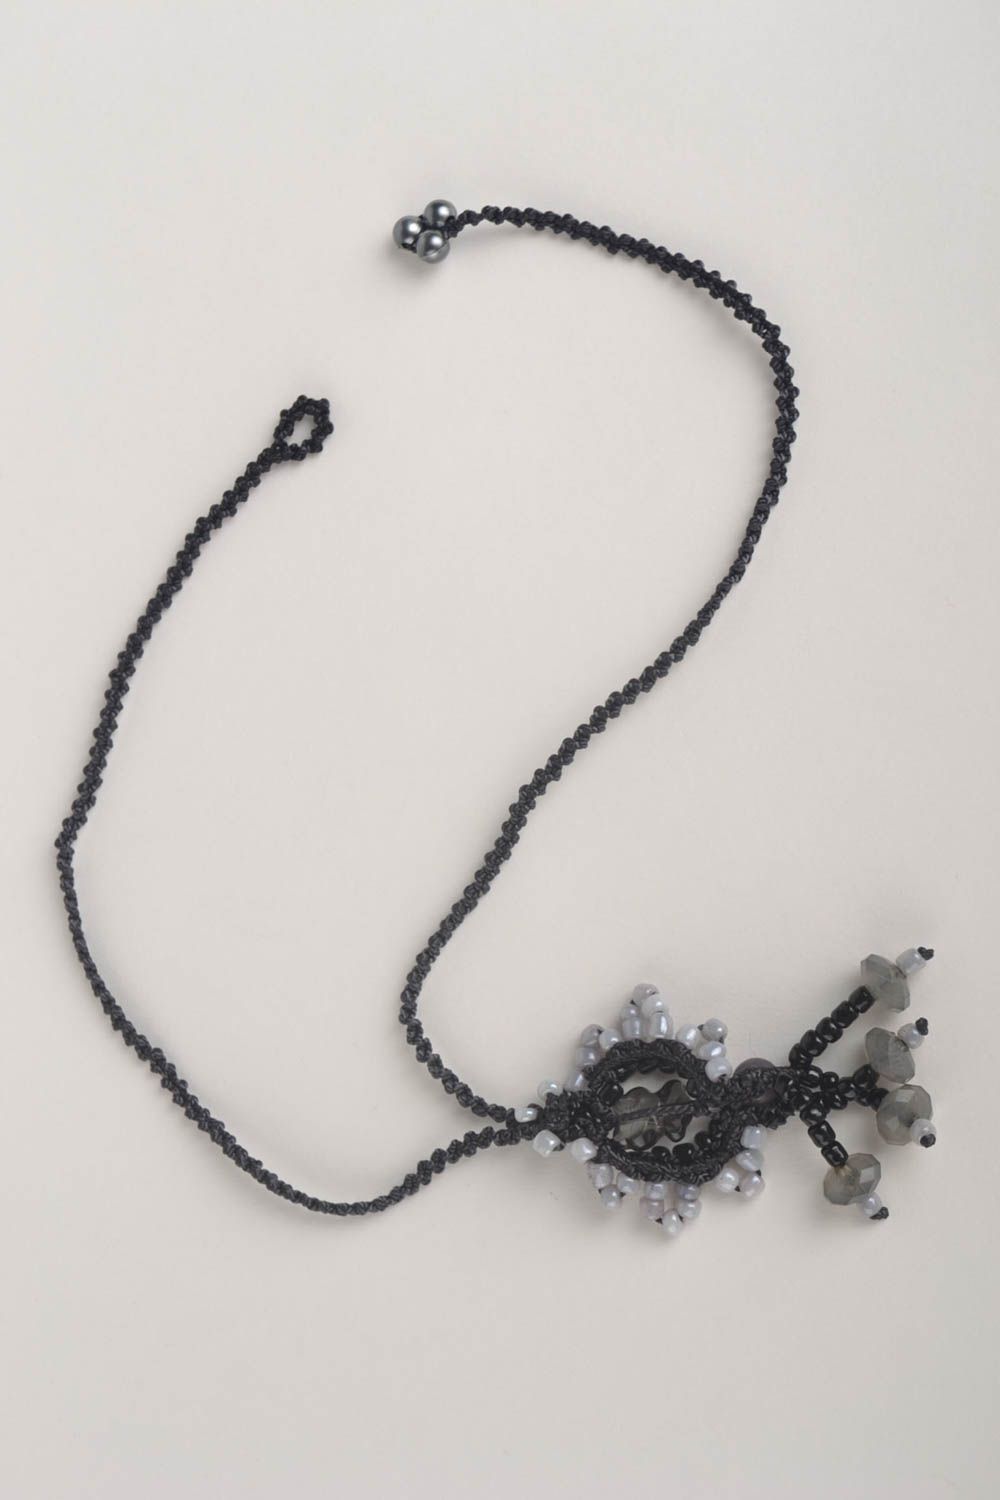 Handmade pendant unusual pendant designer jewelry macrame pendant gift ideas photo 2